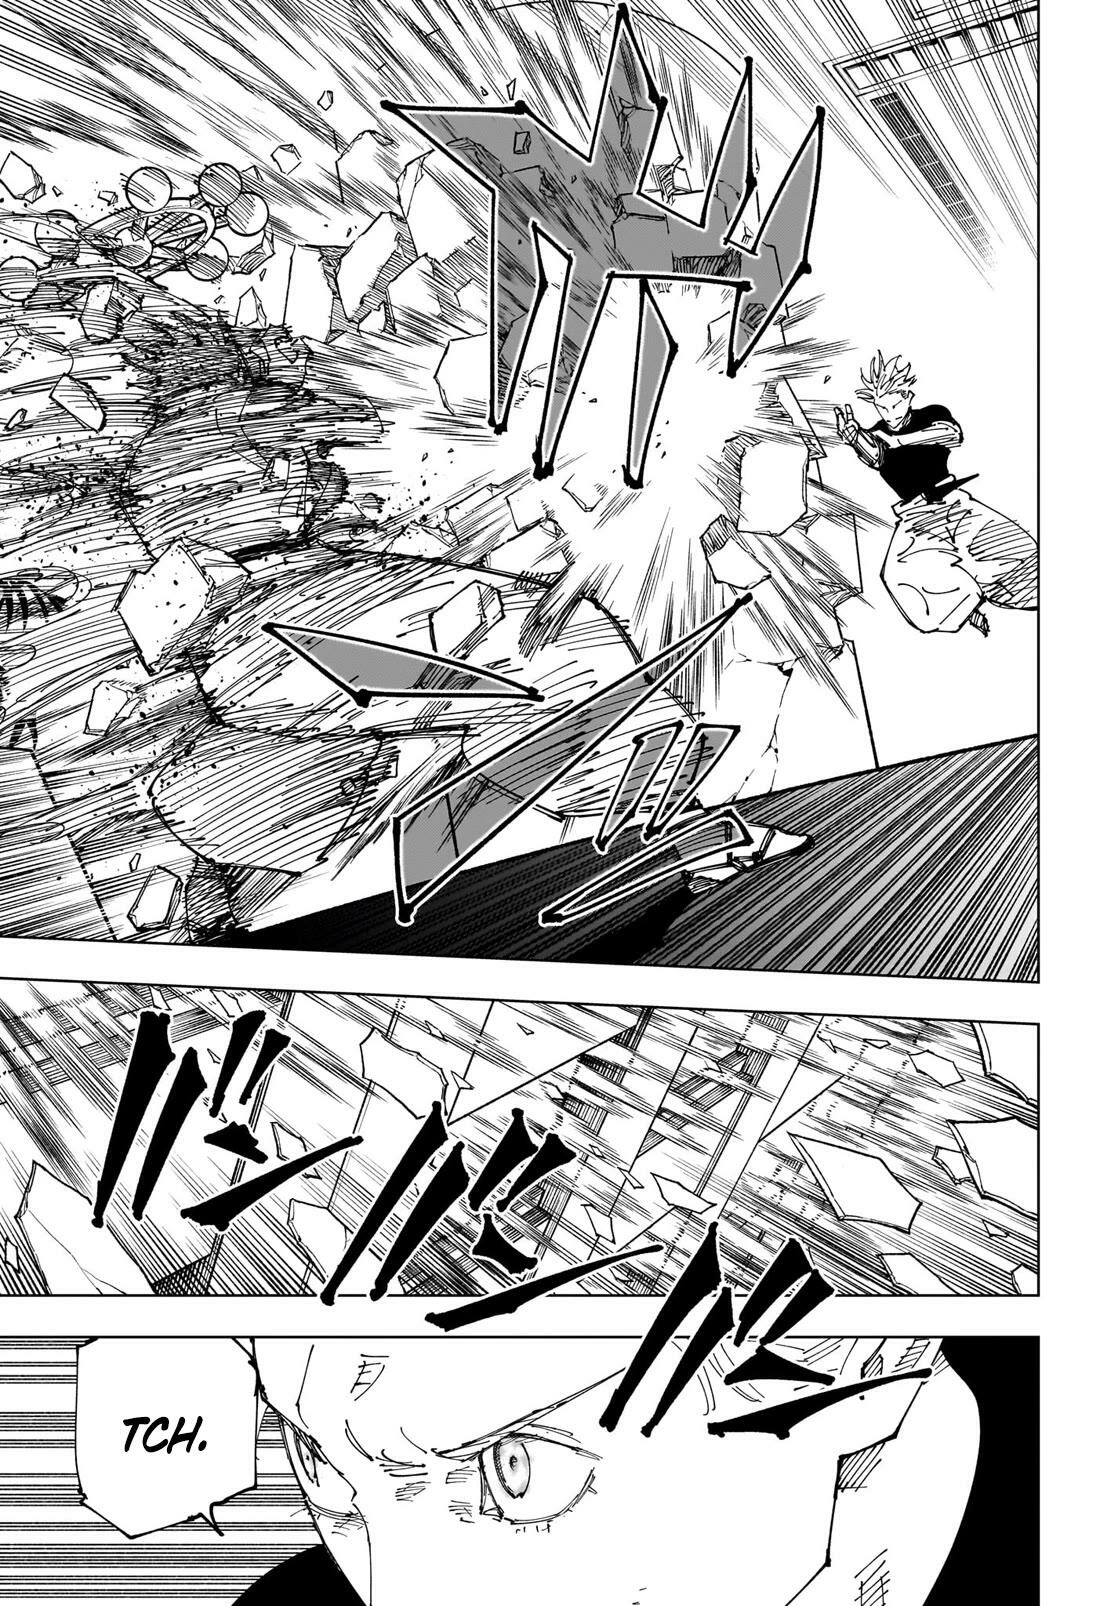 Jujutsu Kaisen Chapter 232: The Decisive Battle In The Uninhabited, Demon-Infested Shinjuku ⑩ page 10 - Mangakakalot